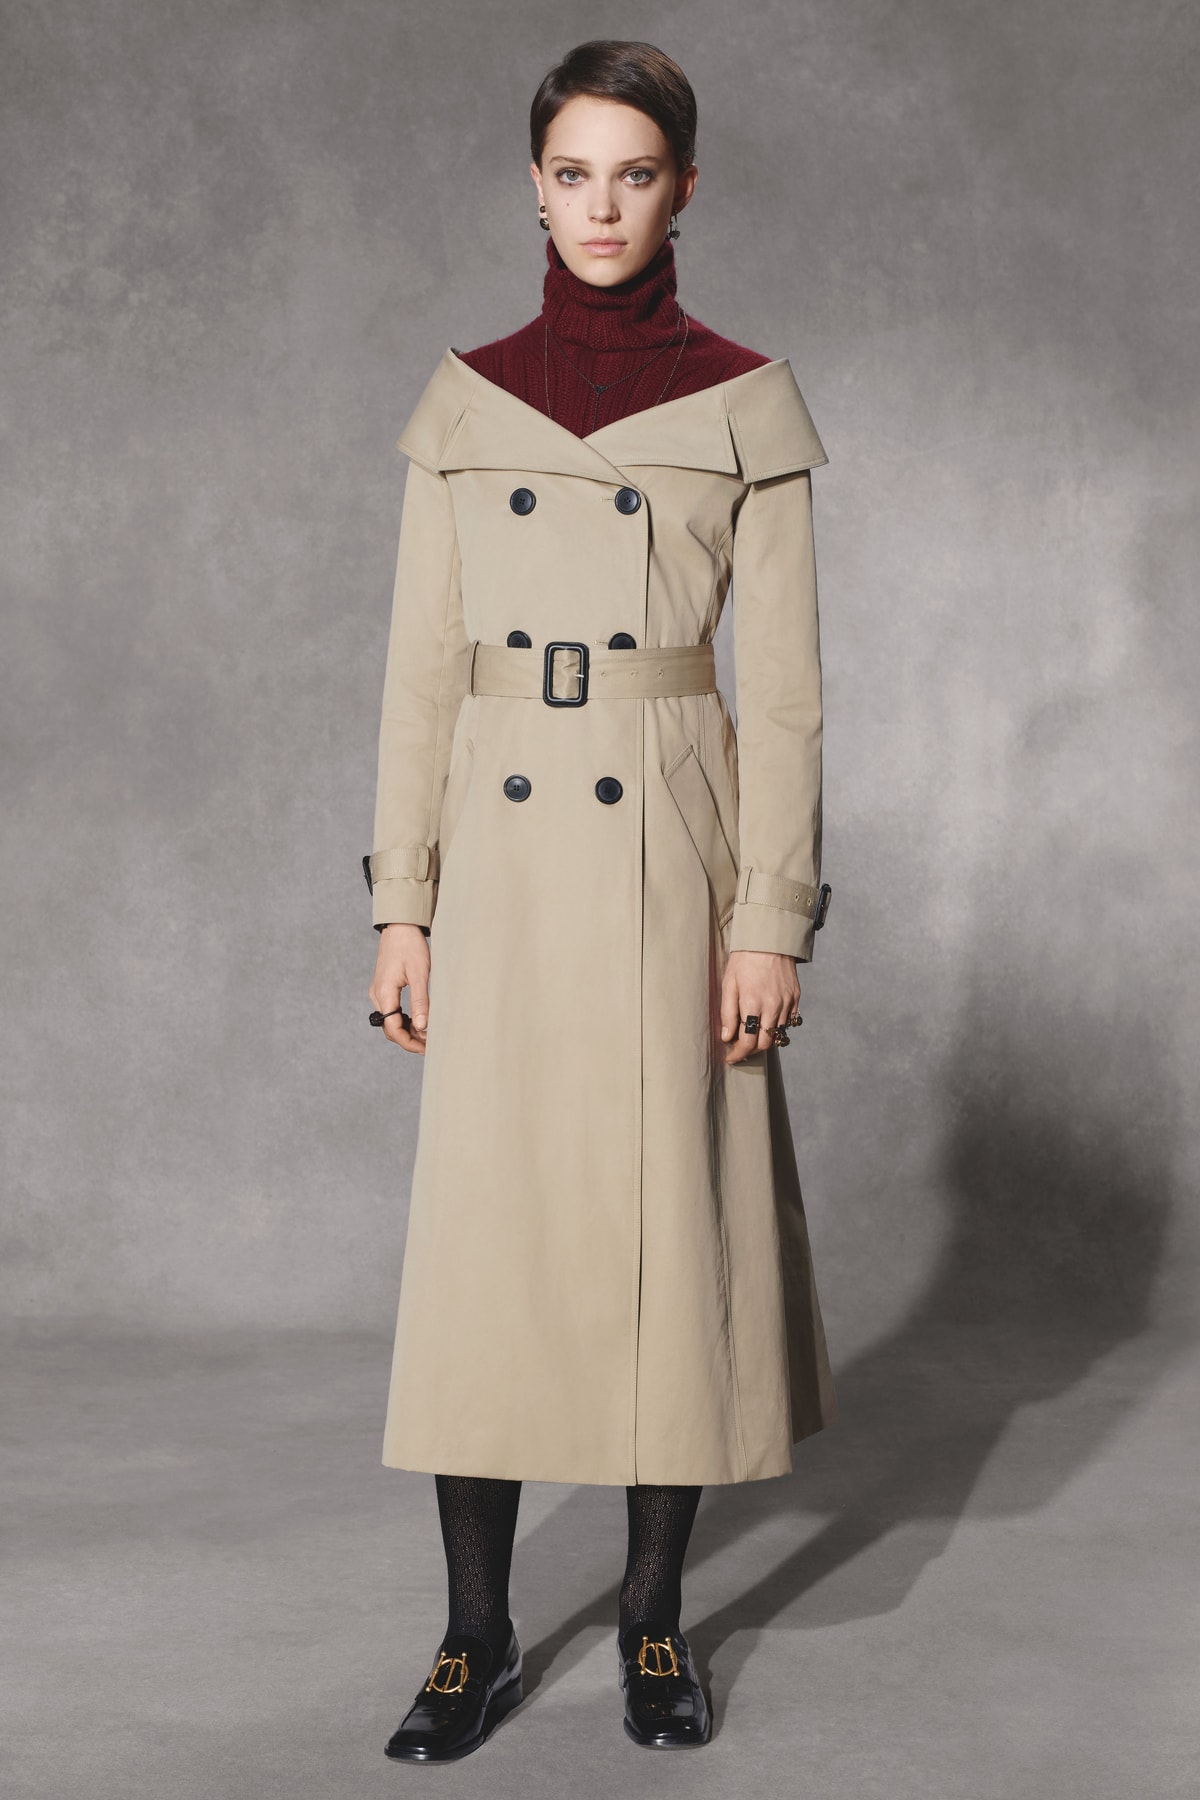 Dior Fall 2018 Collection Lookbook Raincoat Khaki